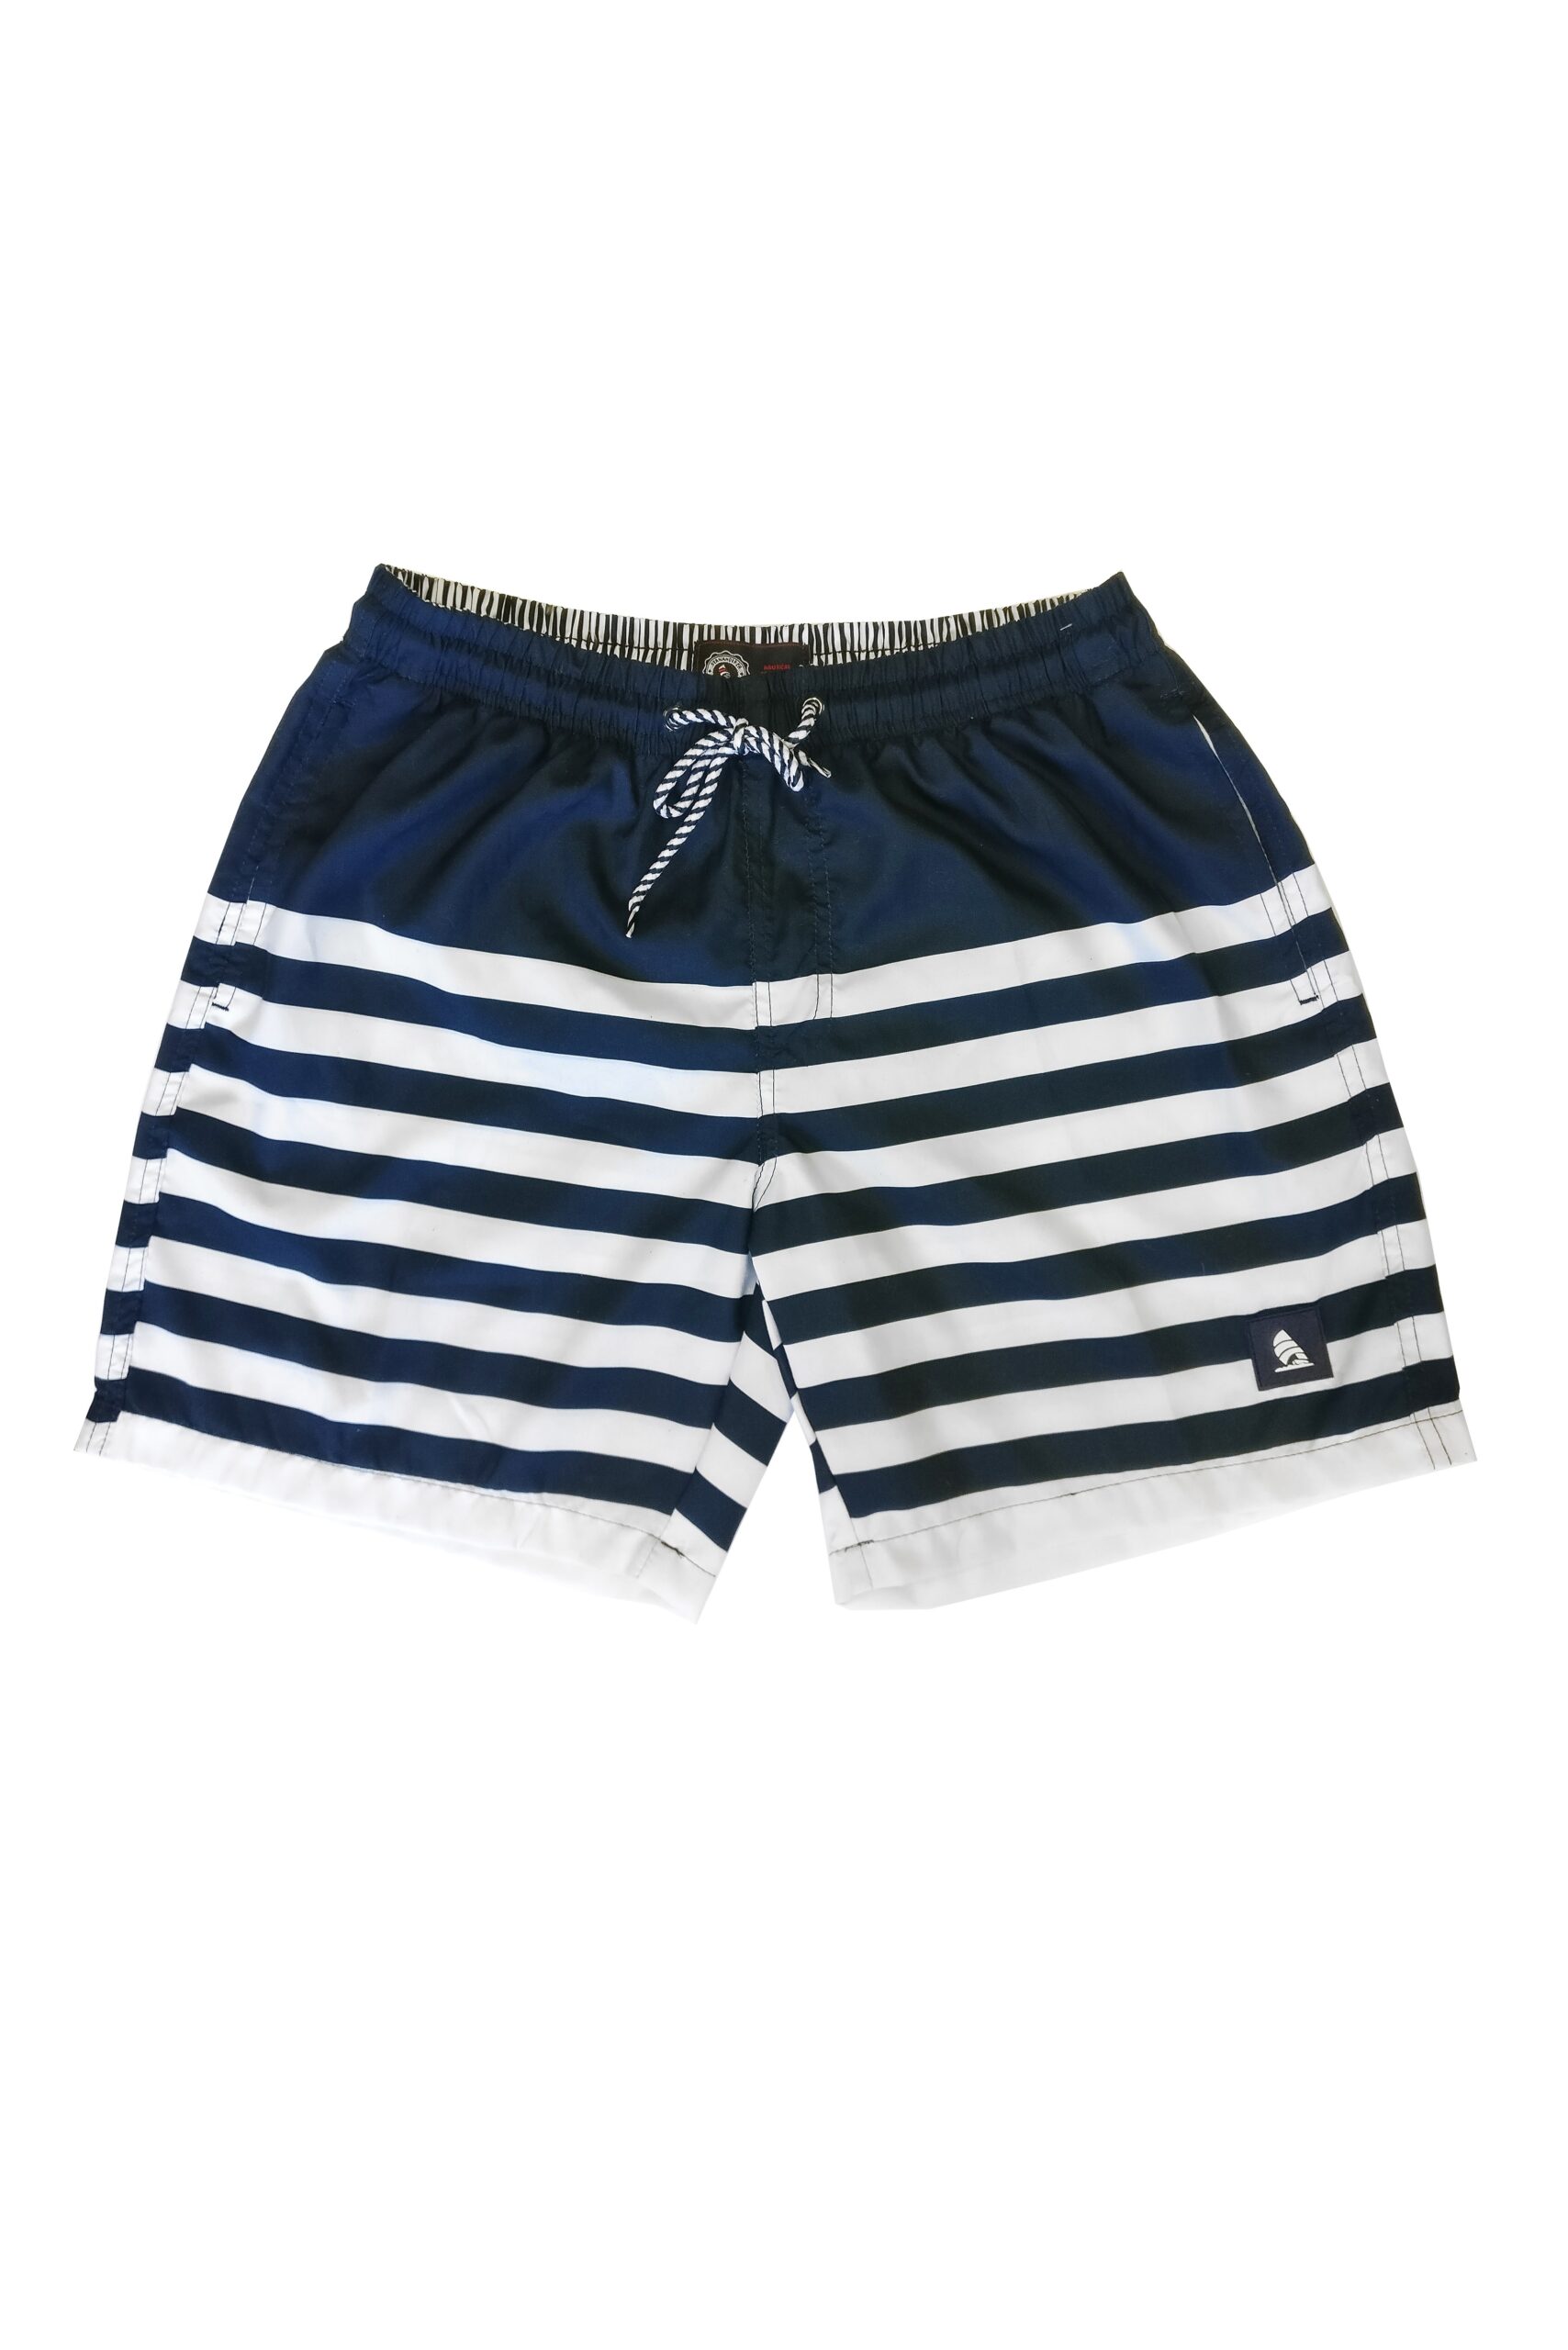 Topman Striped Swim Shorts Colour Navy Blue Depop, 48% OFF